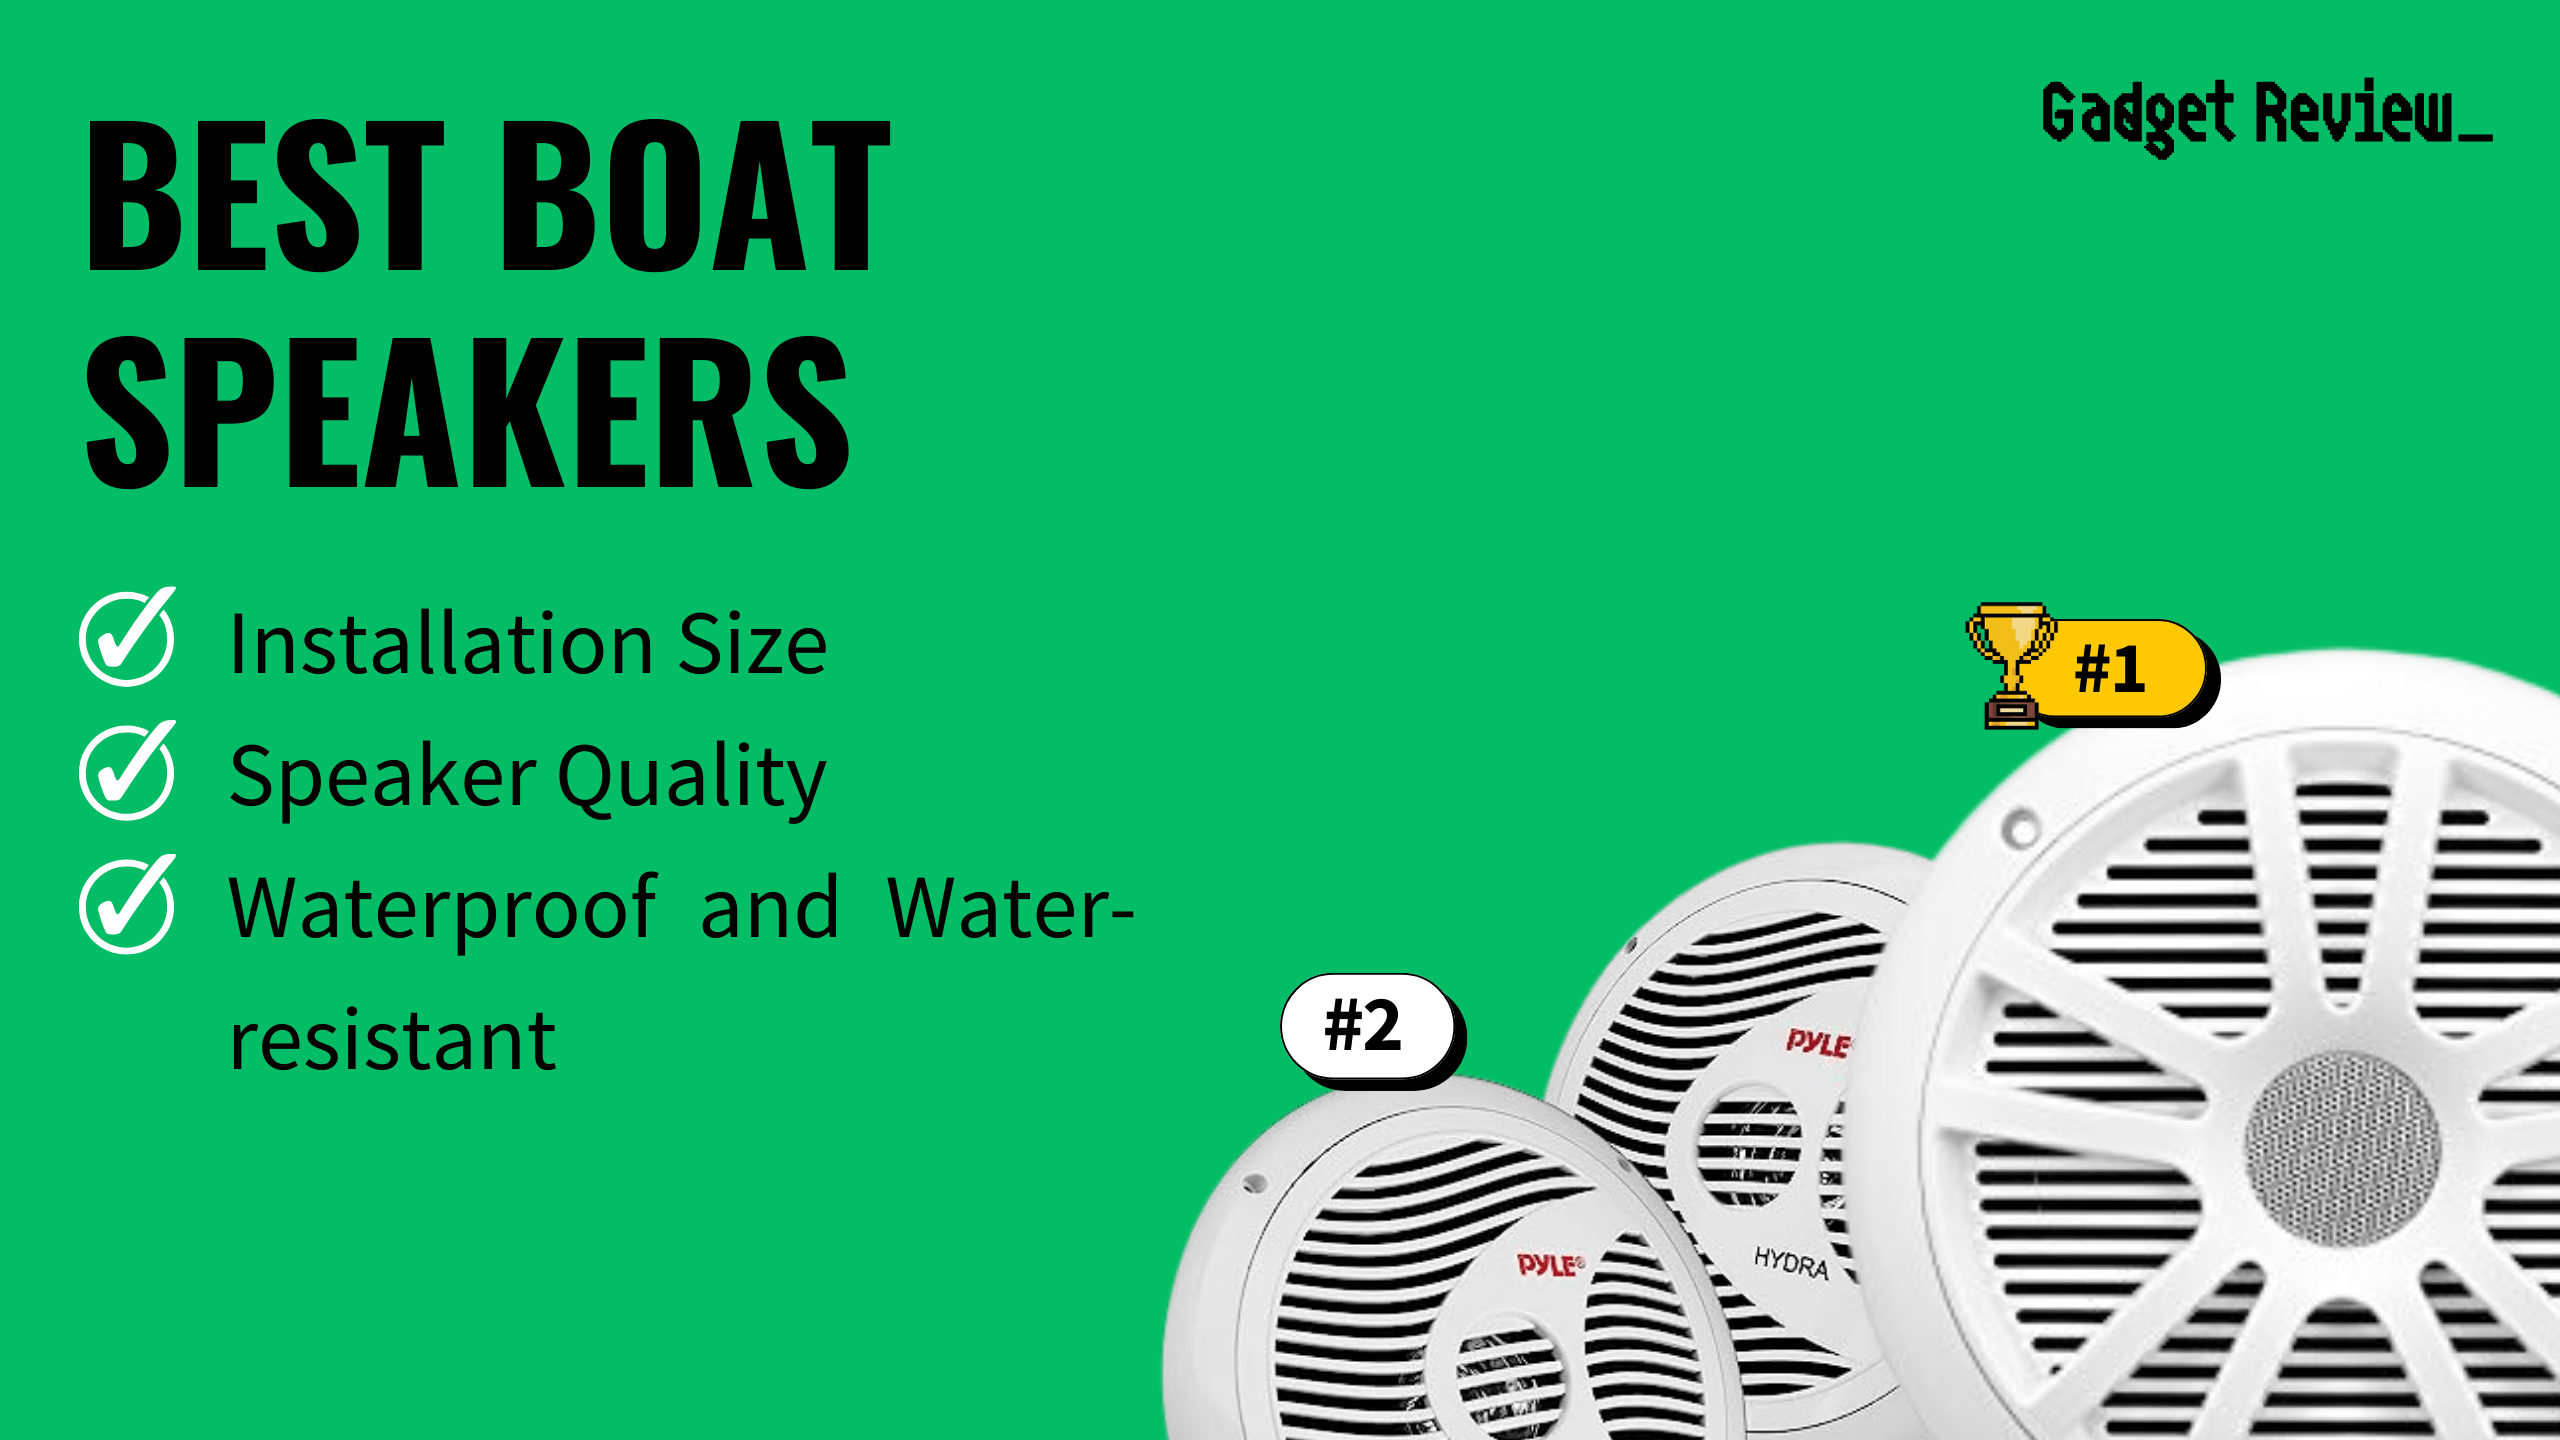 Best Boat Speakers